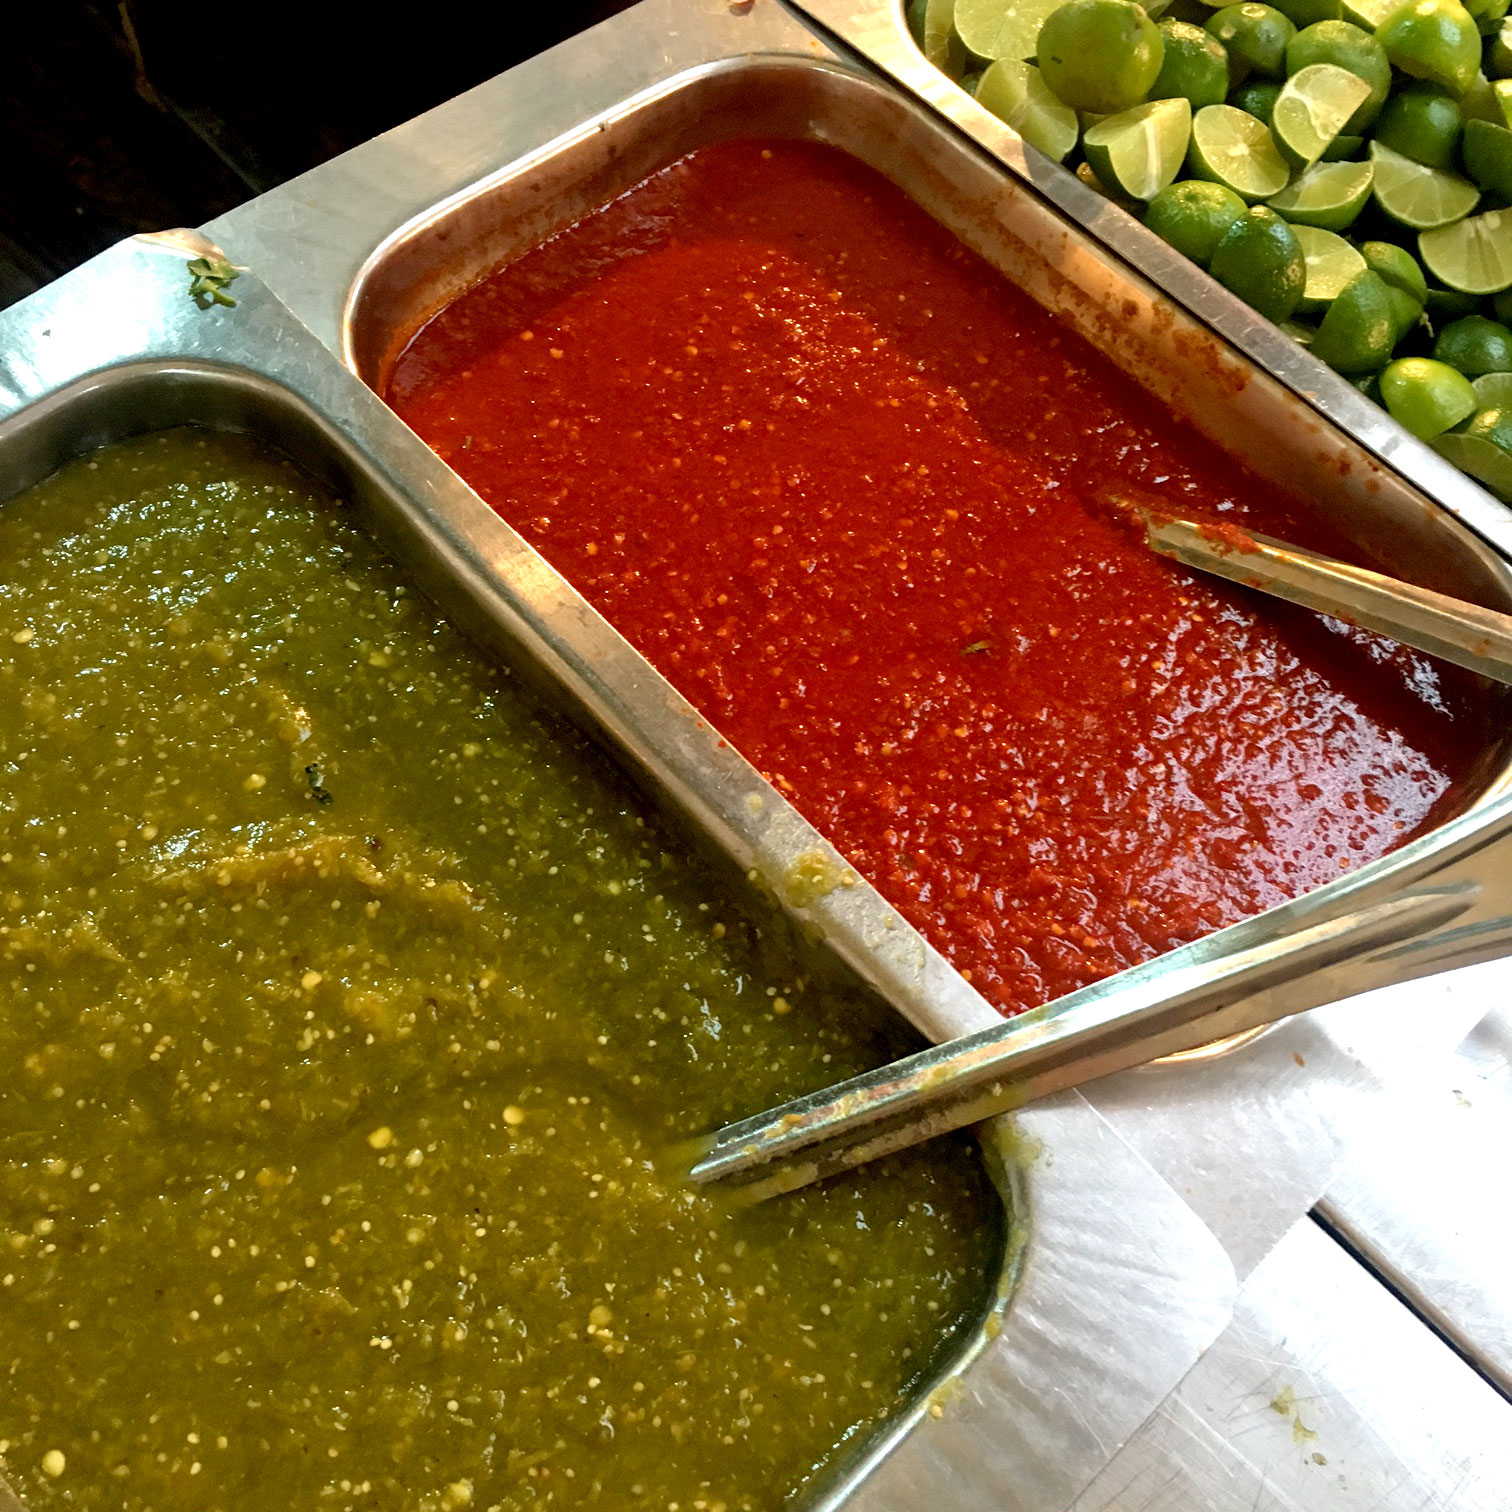 Red salsa vs Green salsa